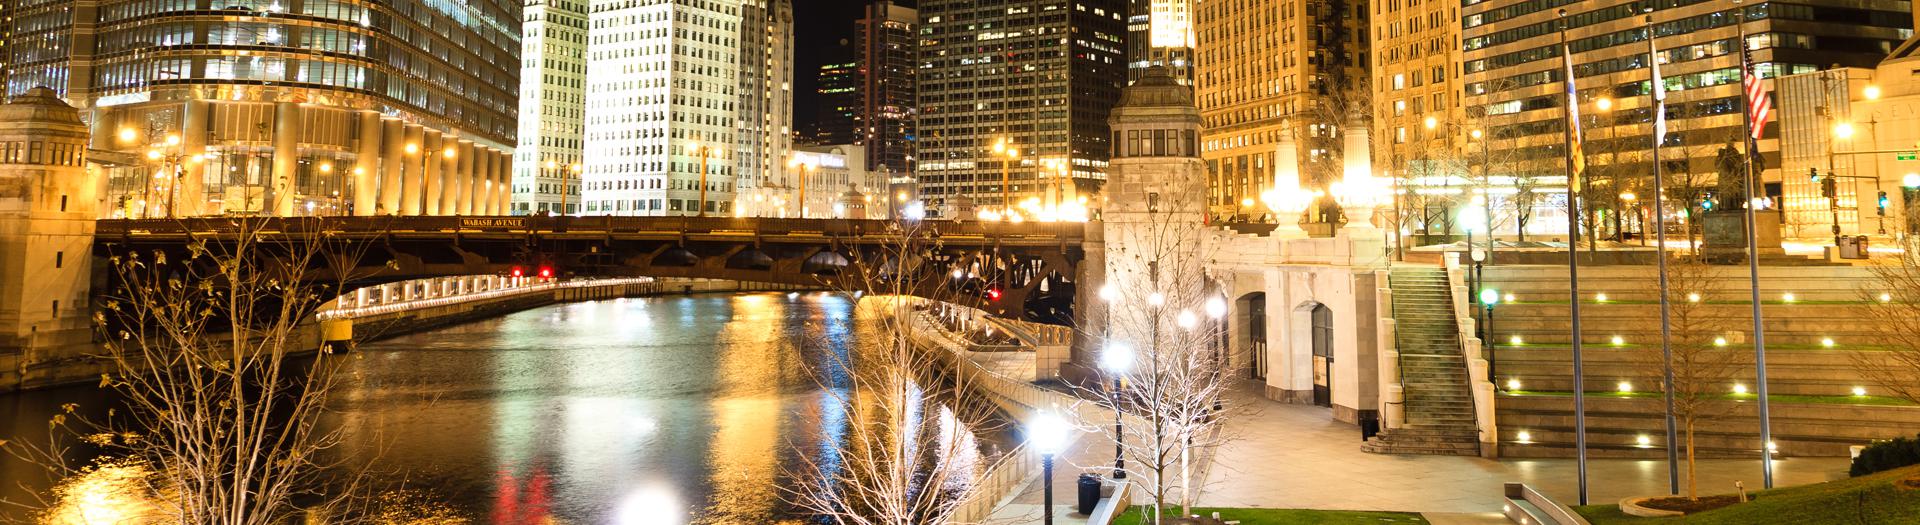 Chicago riverwalk at night